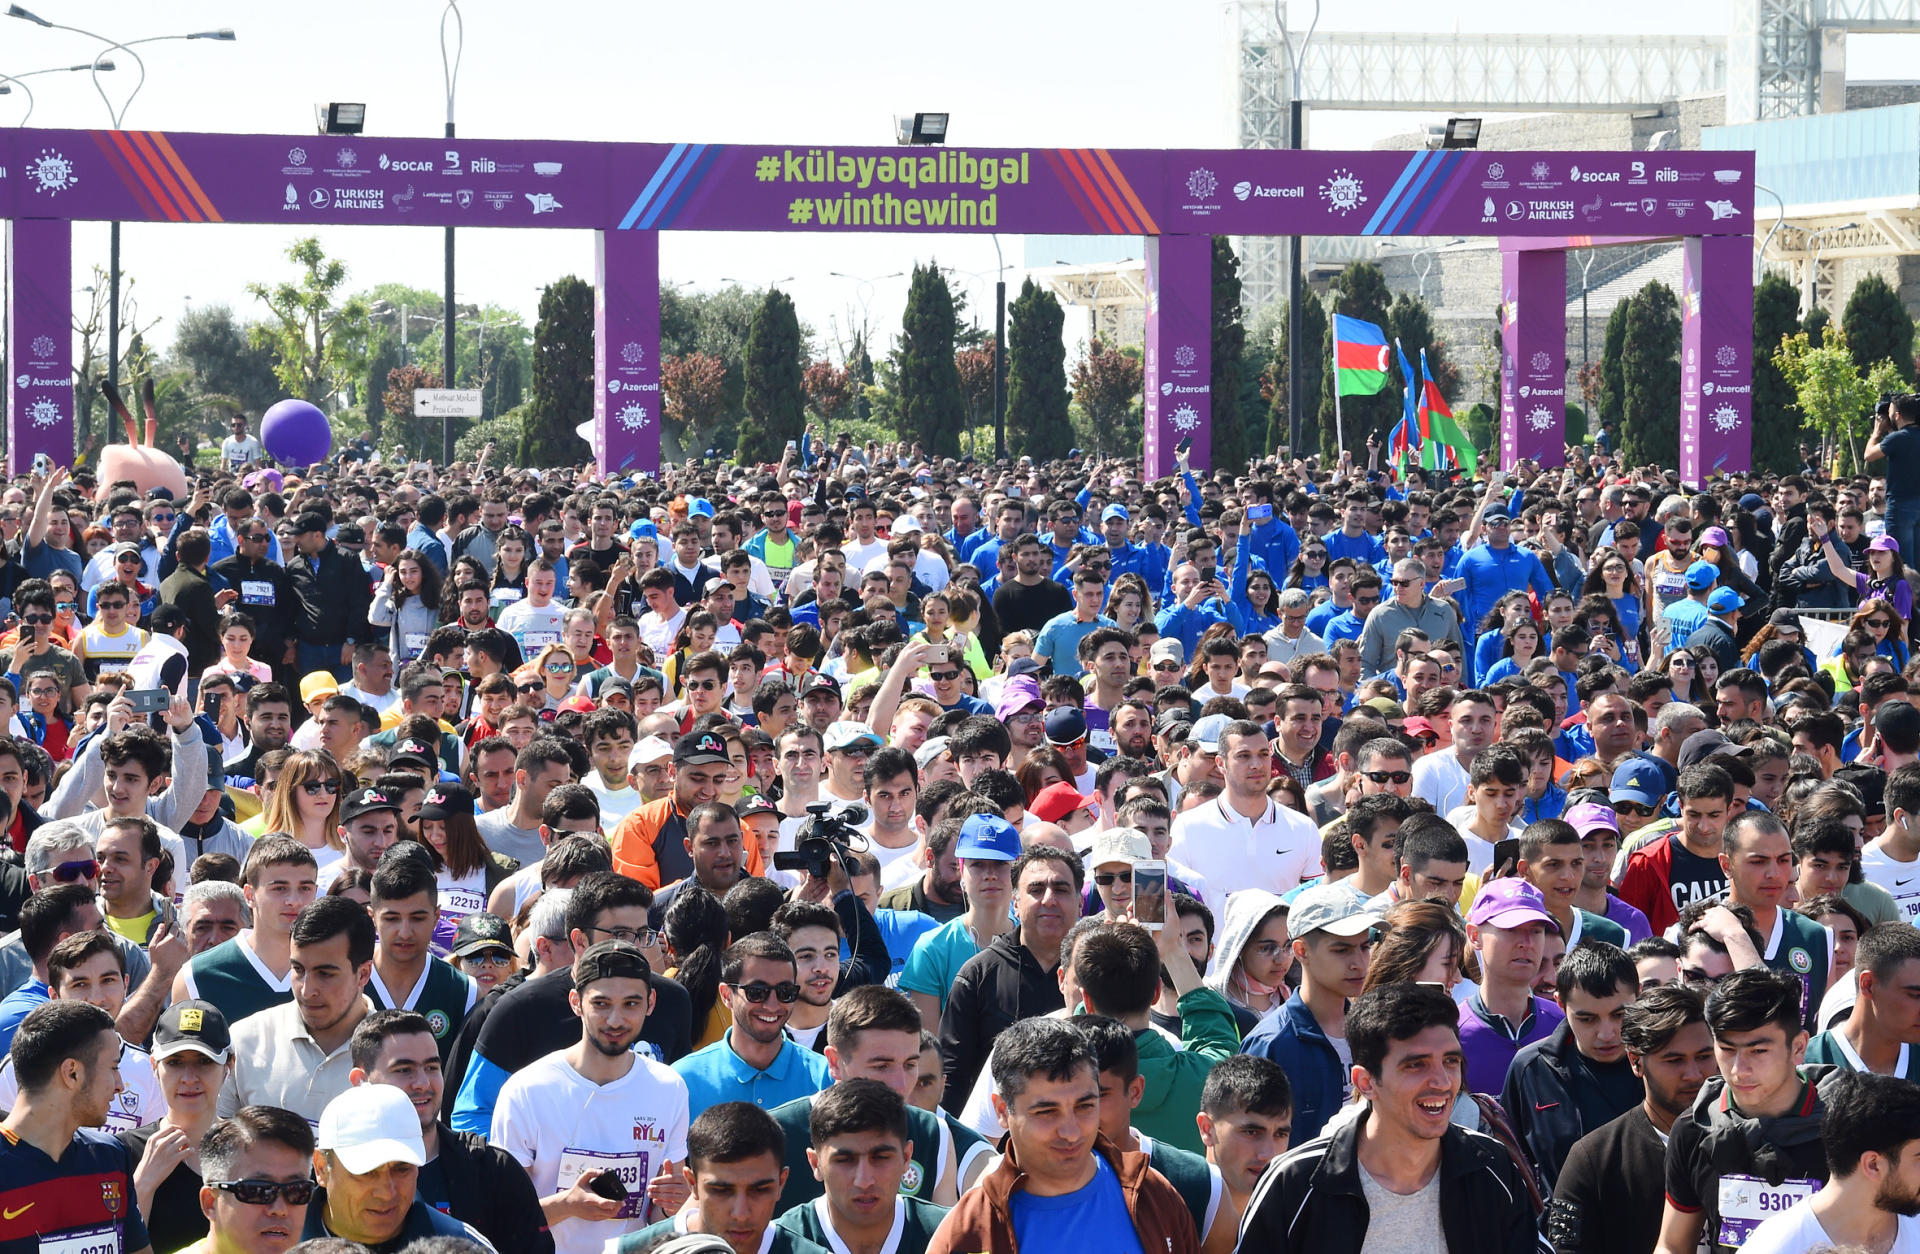 Бакинский марафон-2019: 21 км борьбы и праздника, тысячи эмоций (РЕПОРТАЖ, ФОТО)